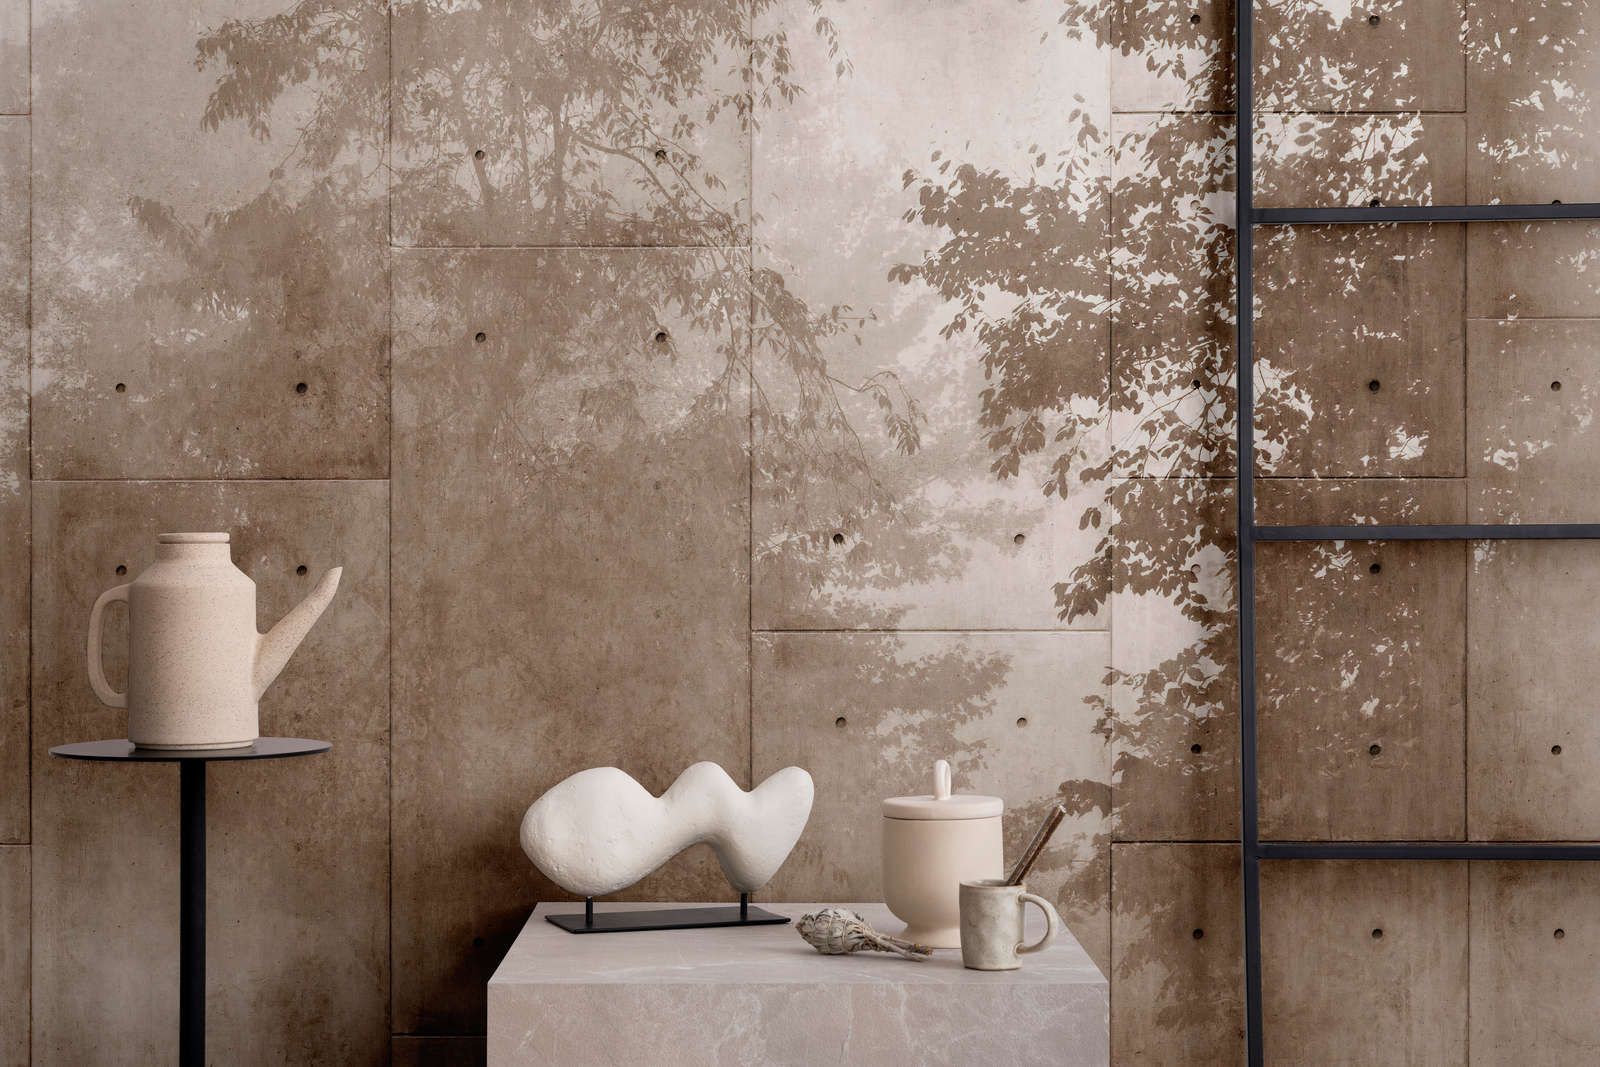             Photo wallpaper »mytho« - treetops on concrete slabs - matt, smooth non-woven fabric
        